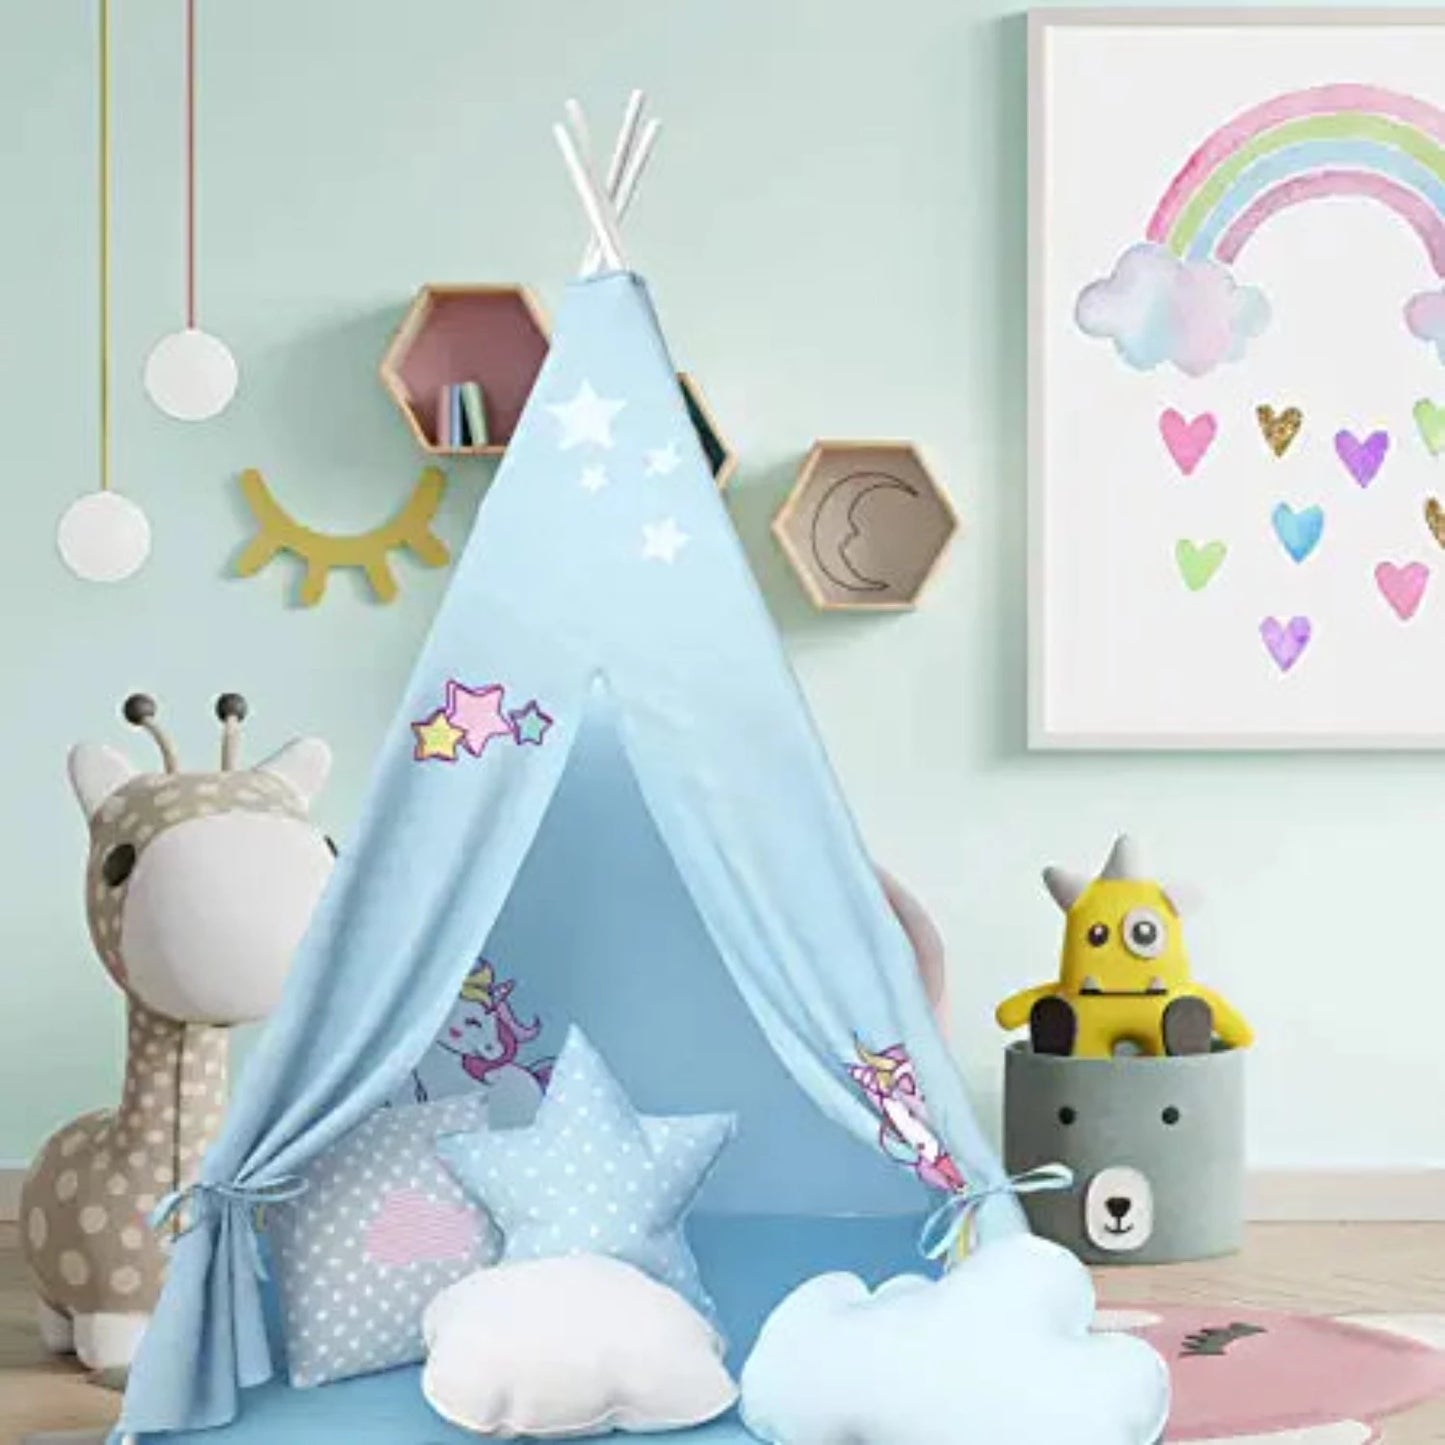 Unicorn Teepee Tent